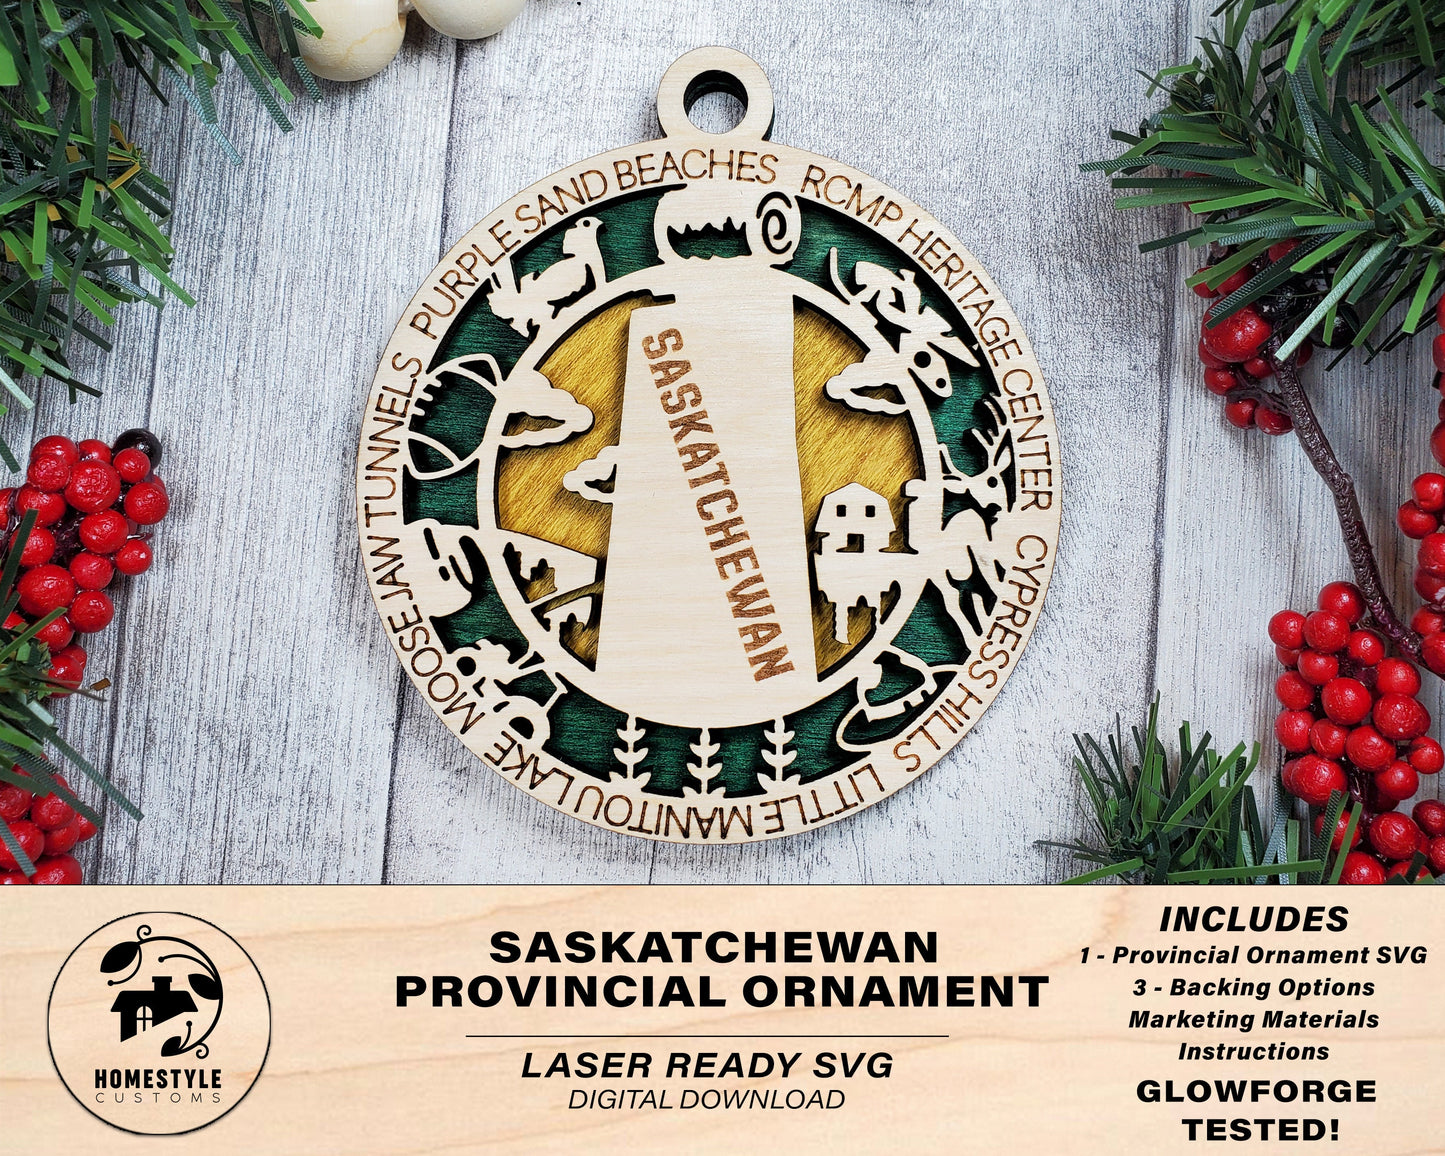 Saskatchewan Provincial Ornament - Canada - SVG File Download - Sized for Glowforge - Laser Ready Digital Files